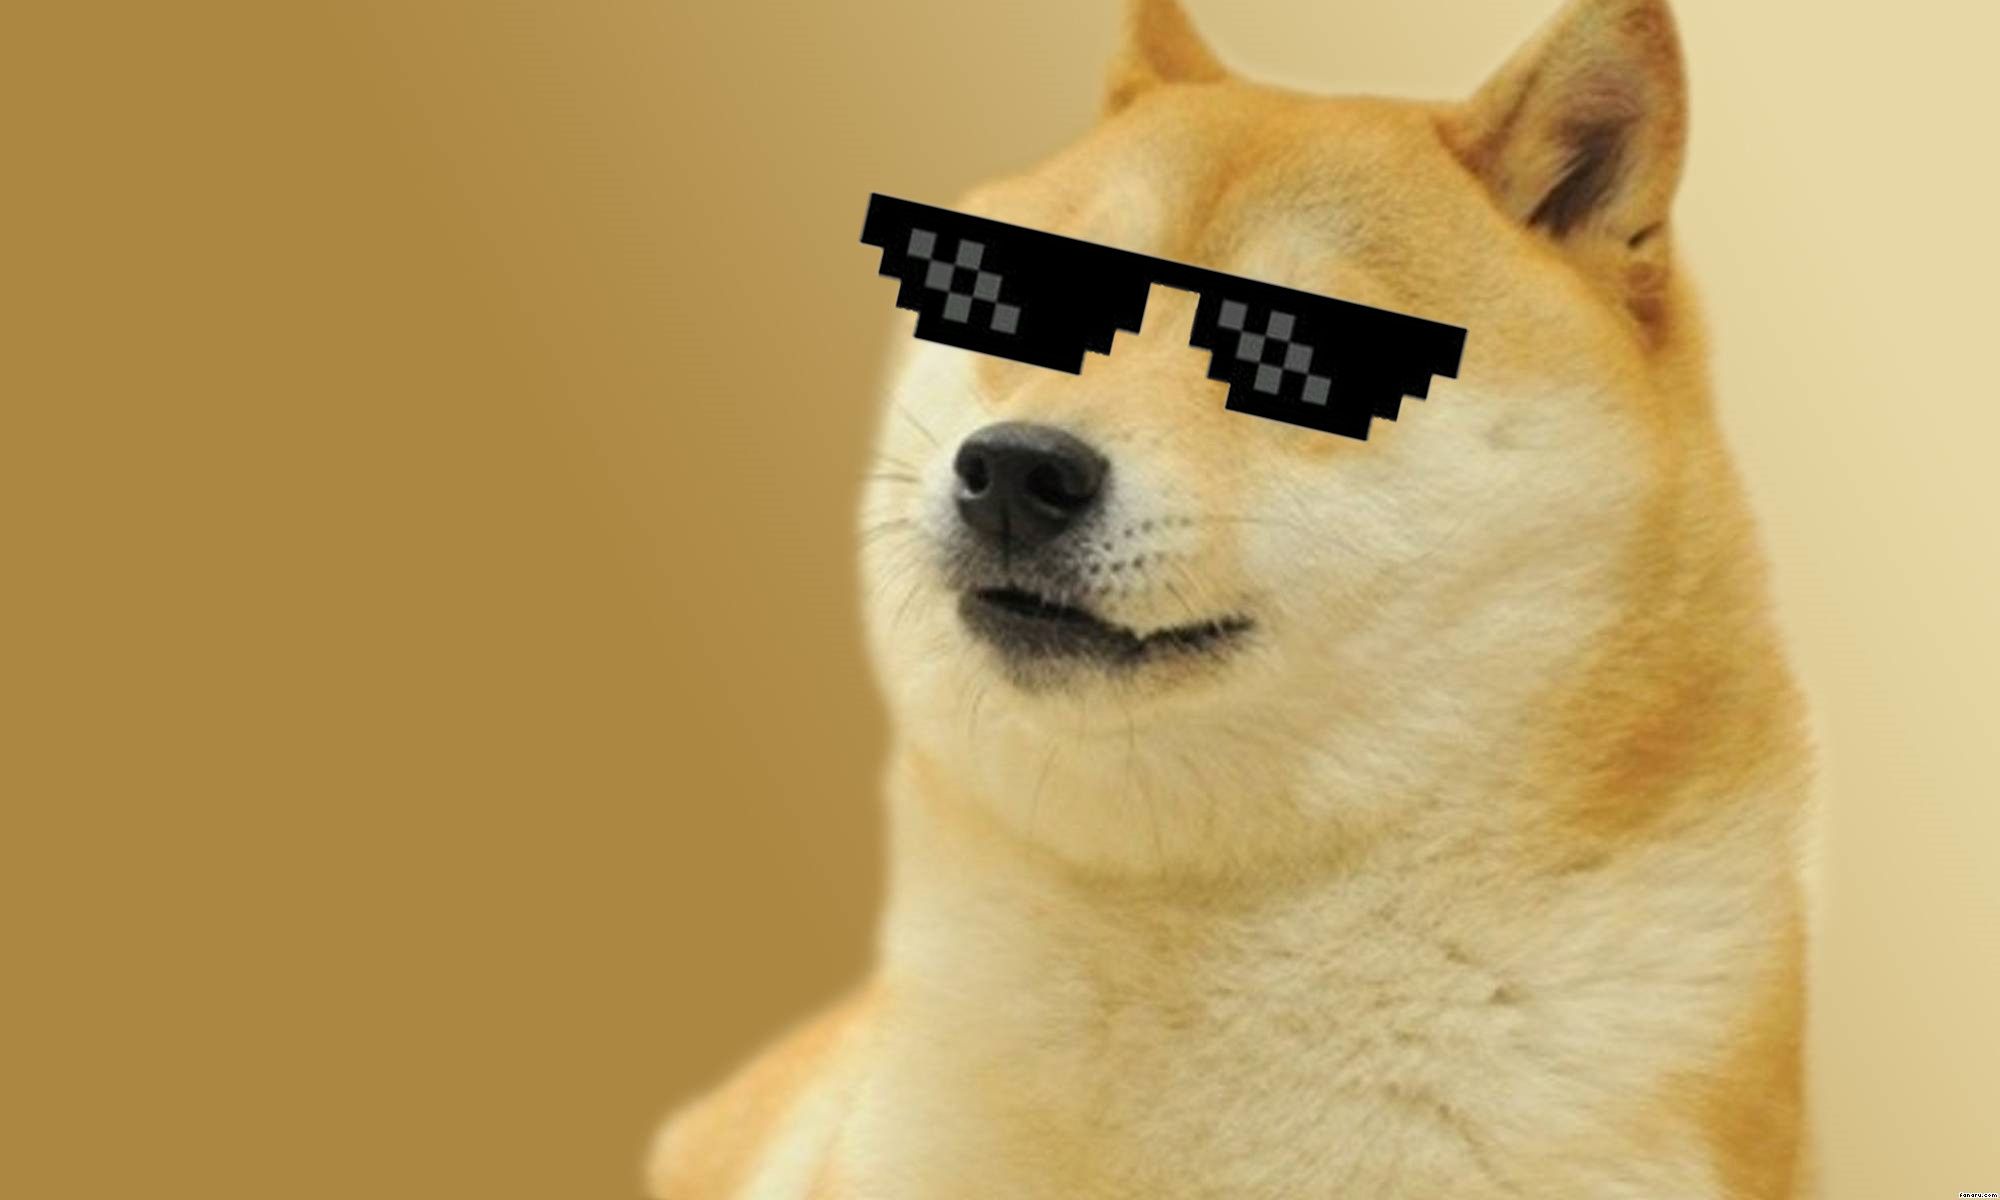 Doge Meme Wallpaper. Doge meme, Doge, Cute